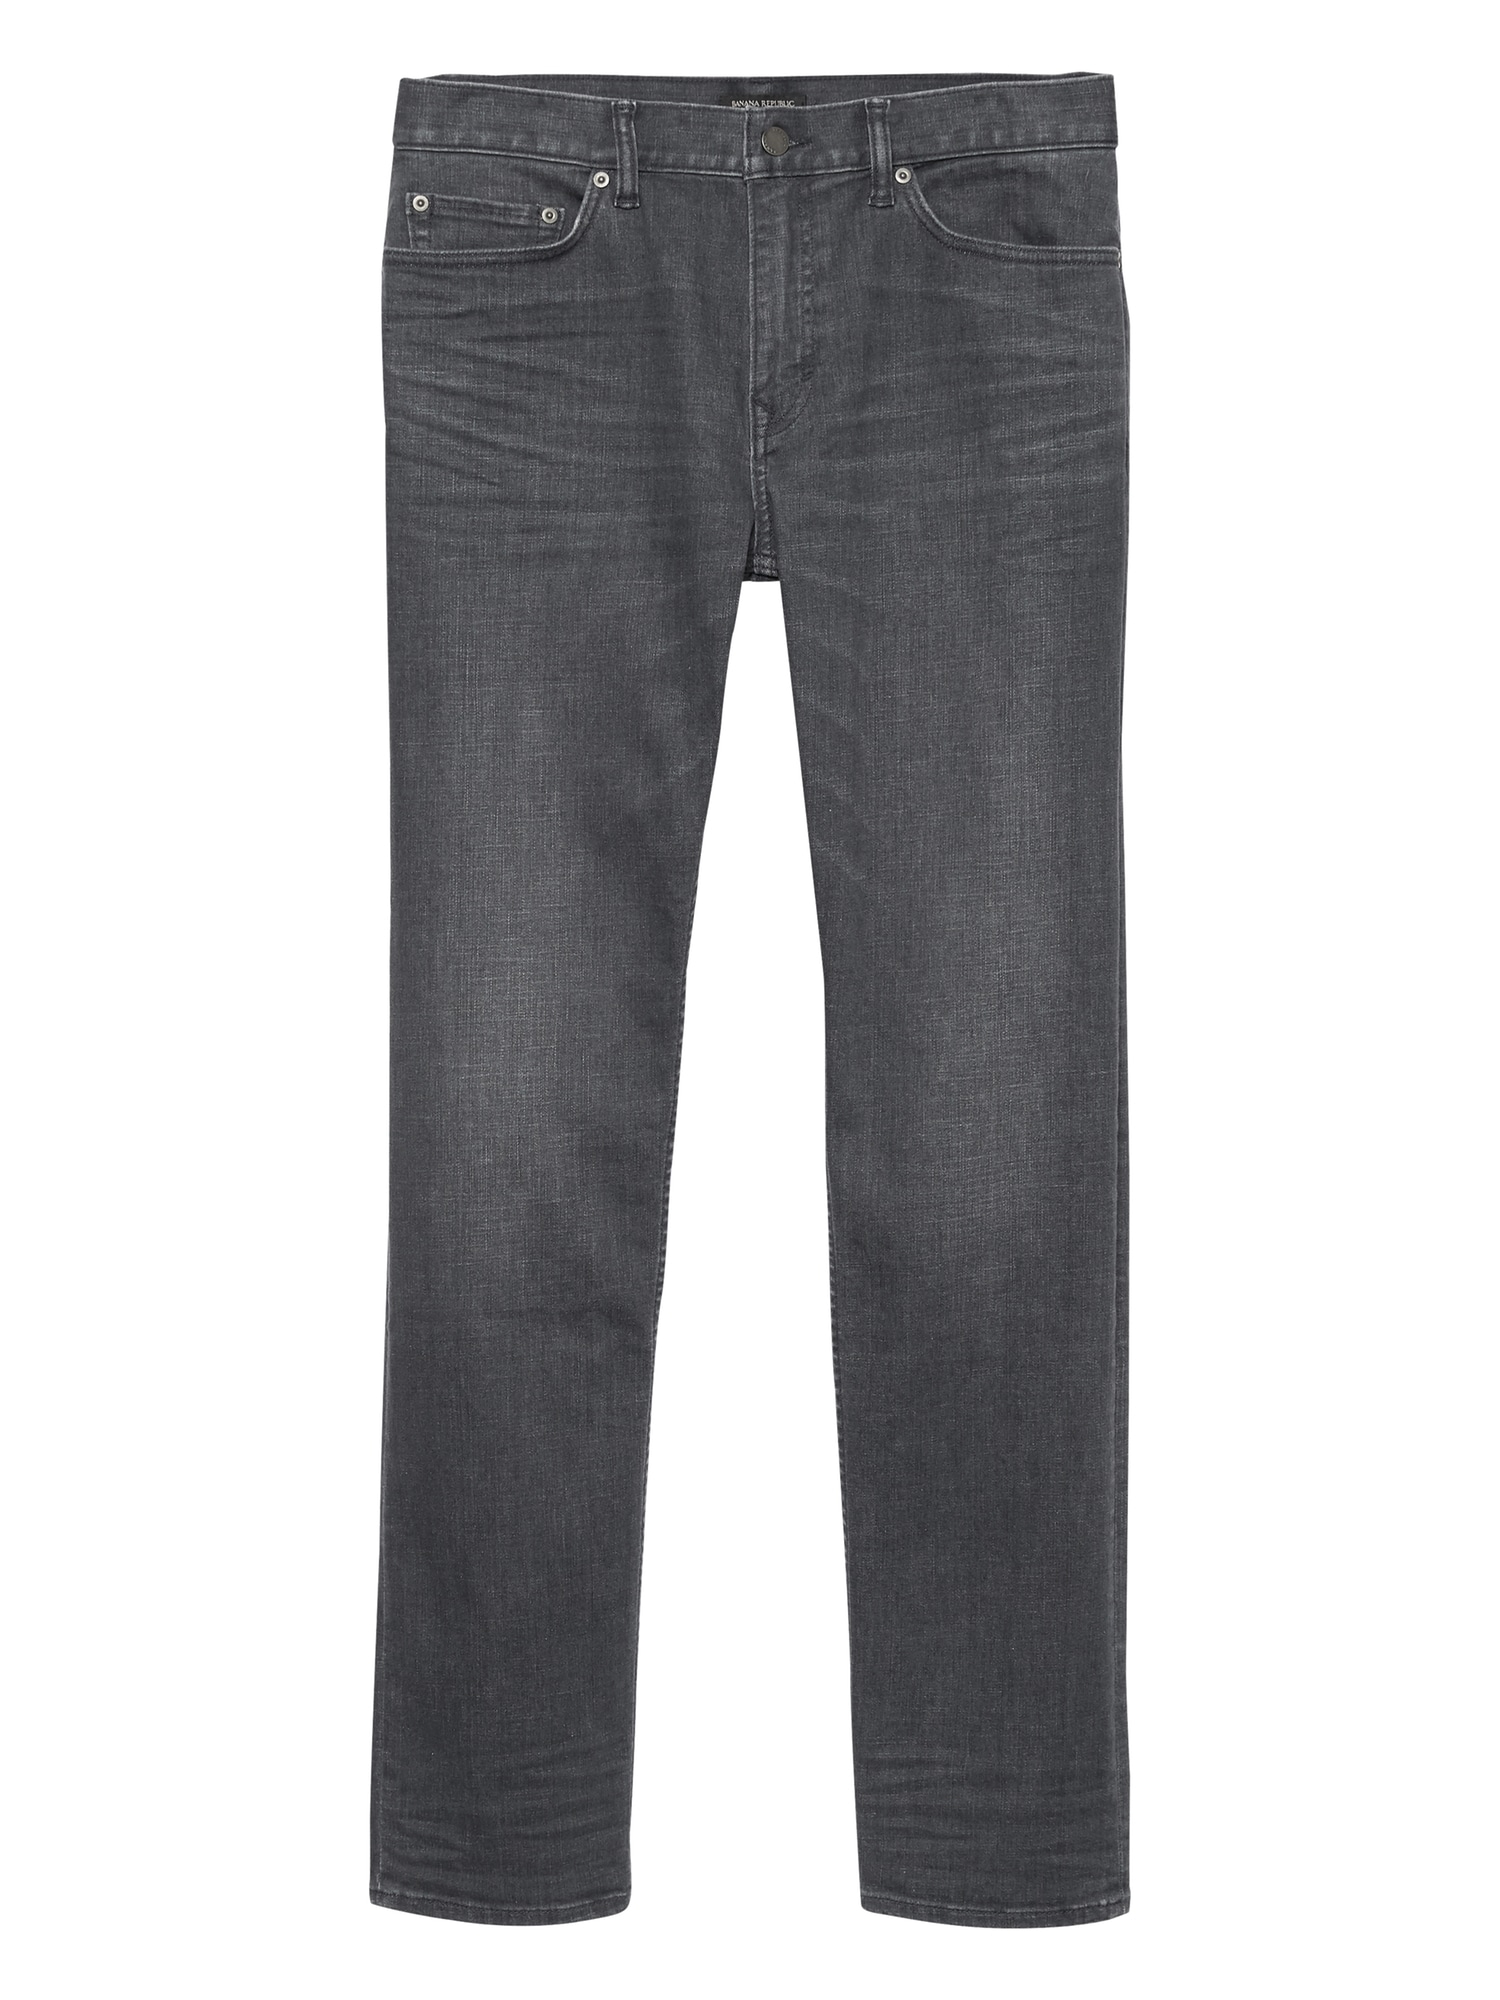 Tapered Rapid Movement Denim Gray Wash Jean